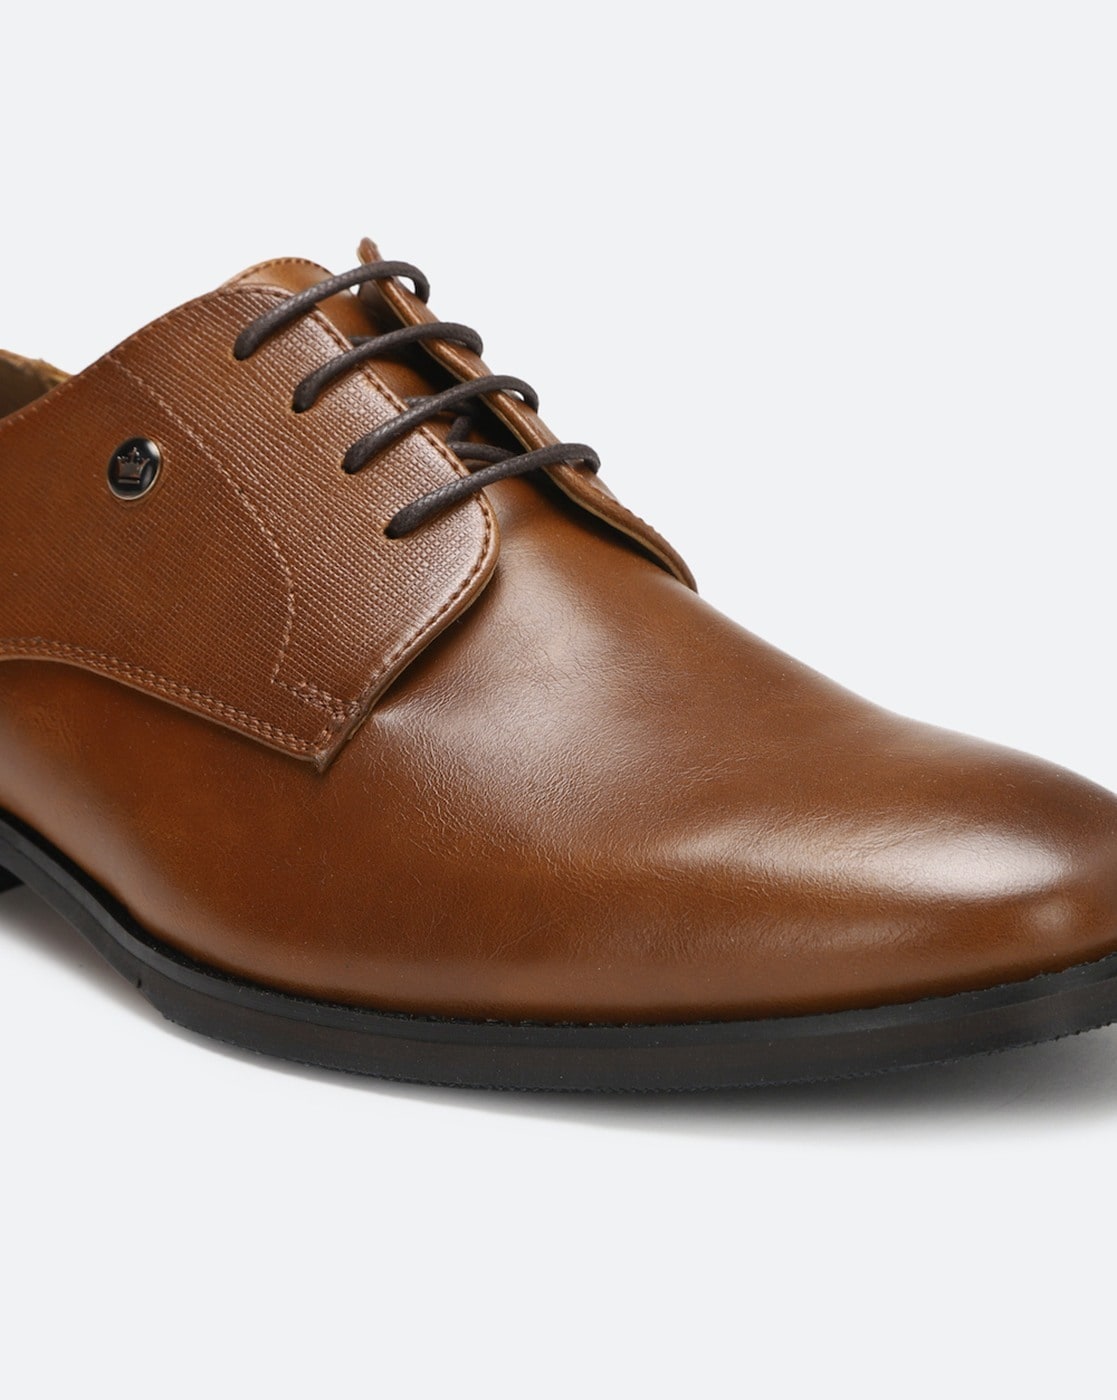 Louis Philippe Men's Brown Oxford Shoes